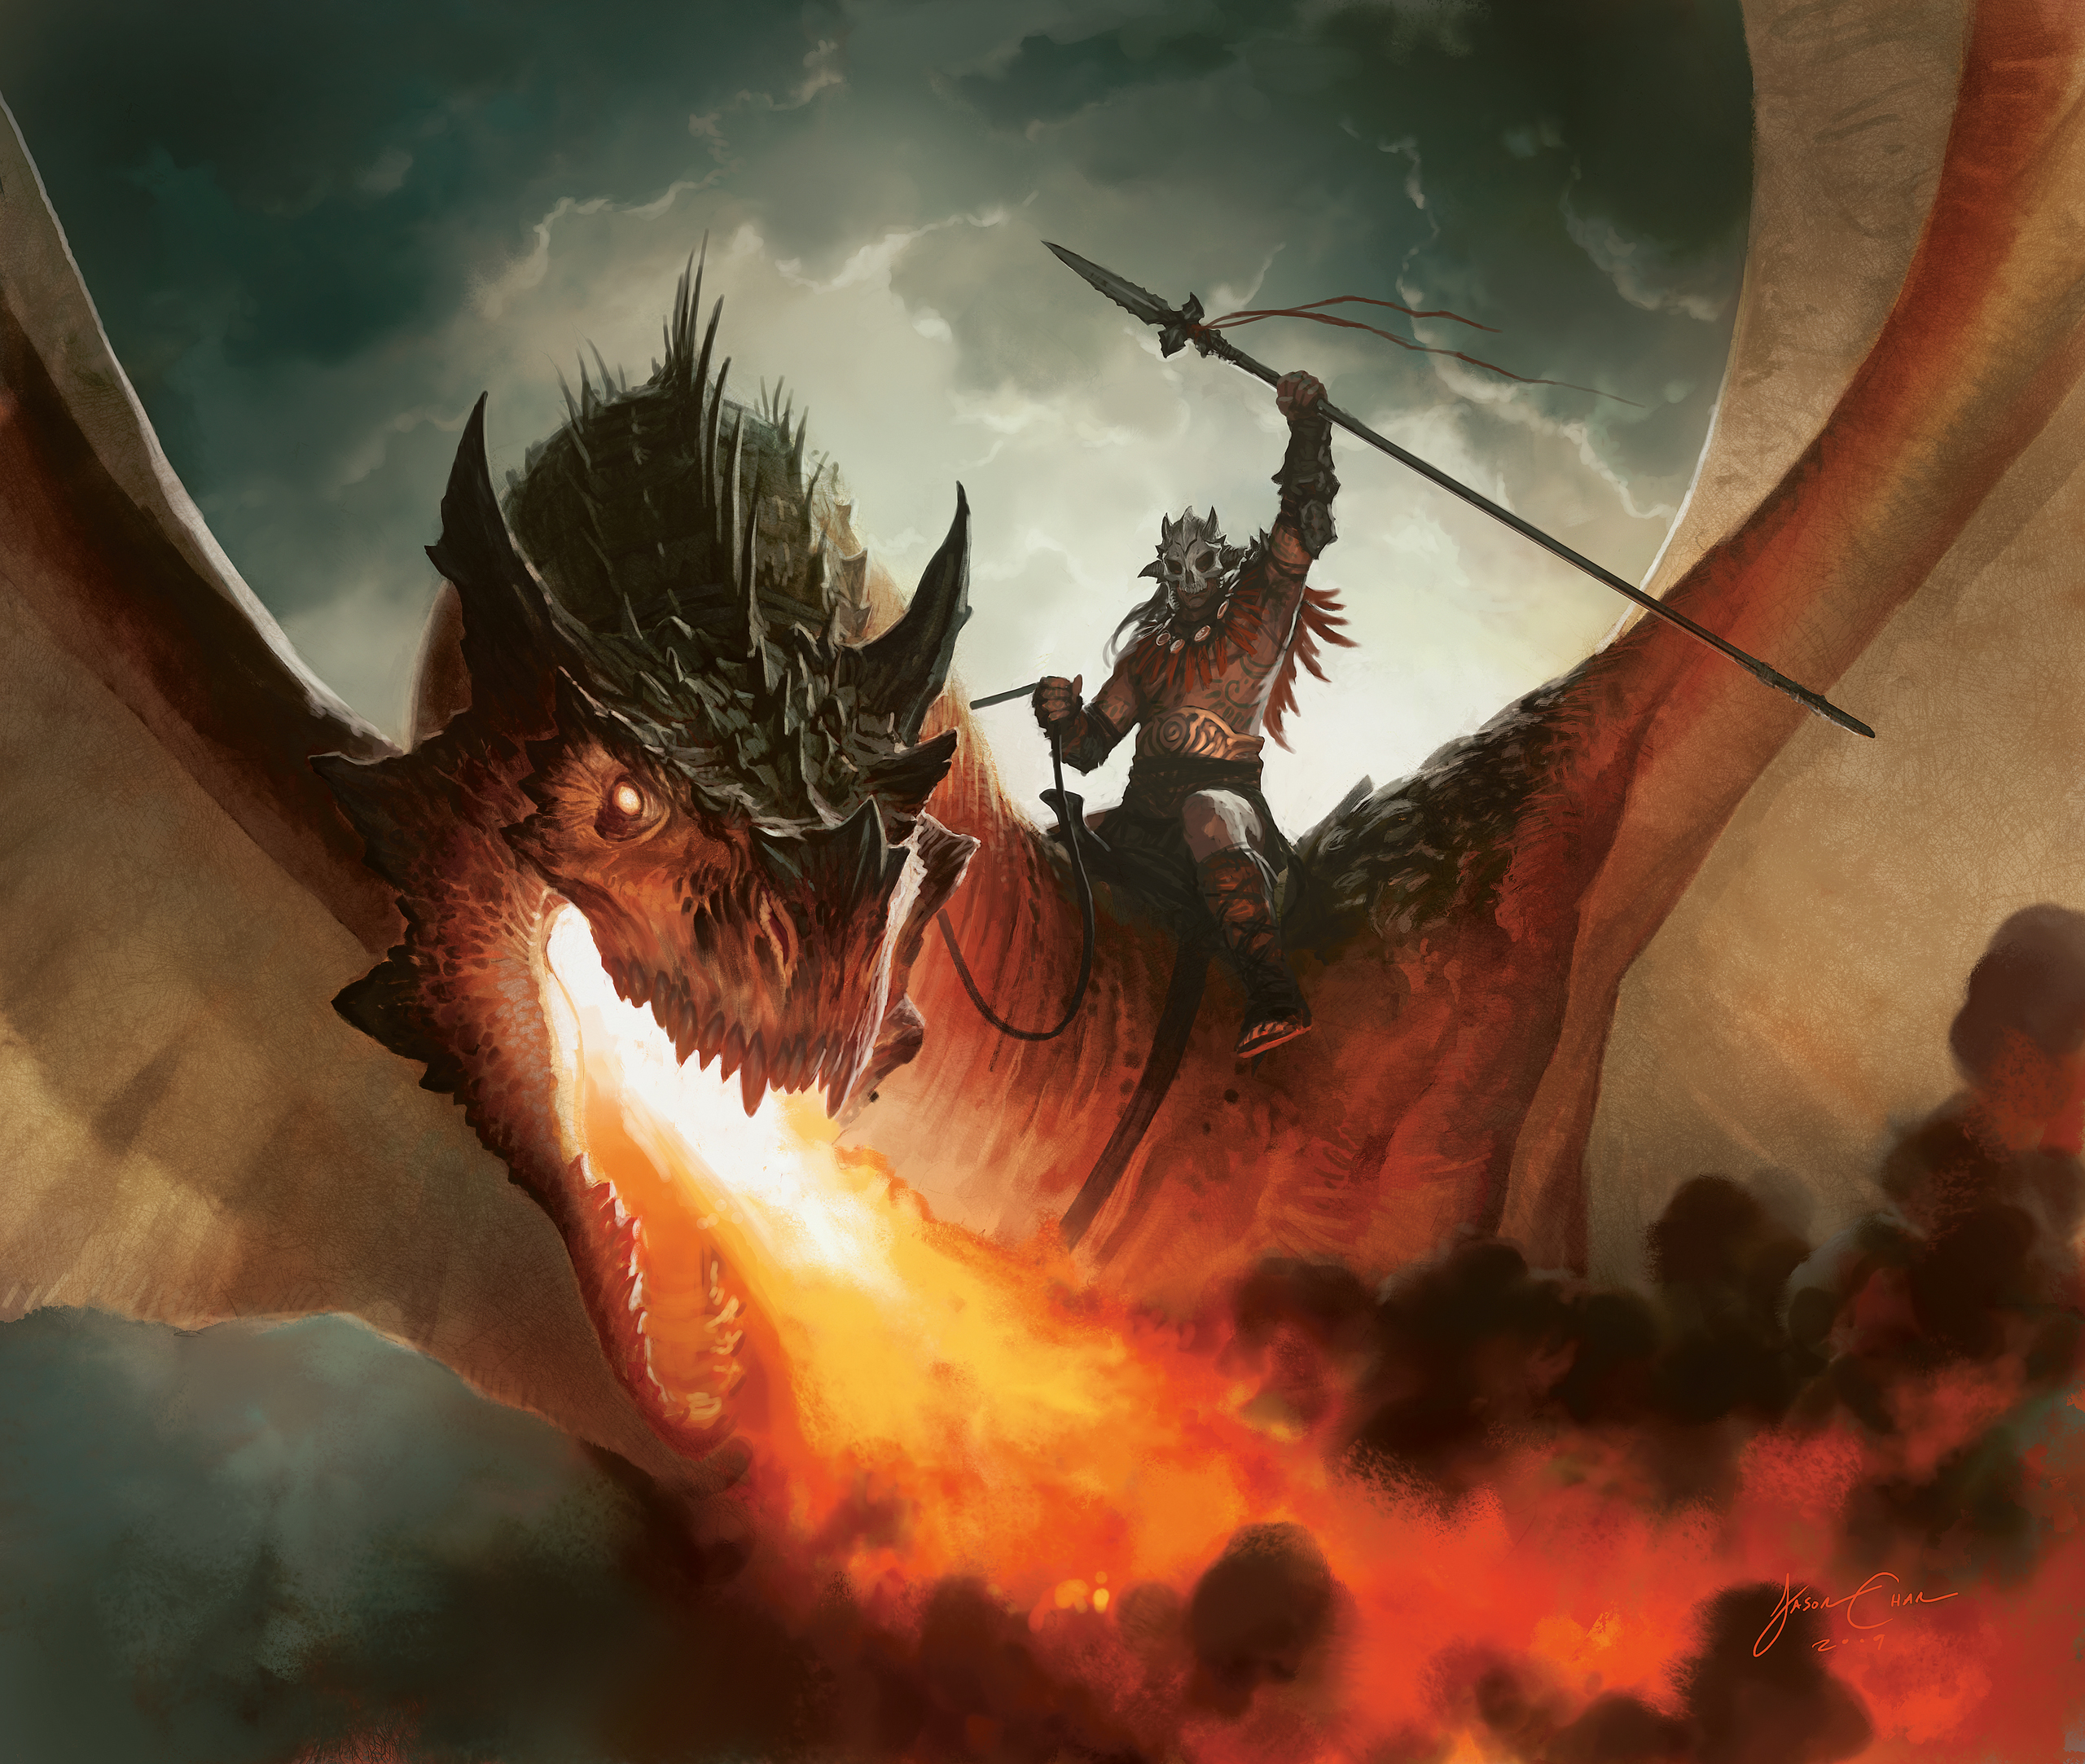 General 2560x2166 gamer Magic: The Gathering warrior dragon creature fire fantasy men fantasy art